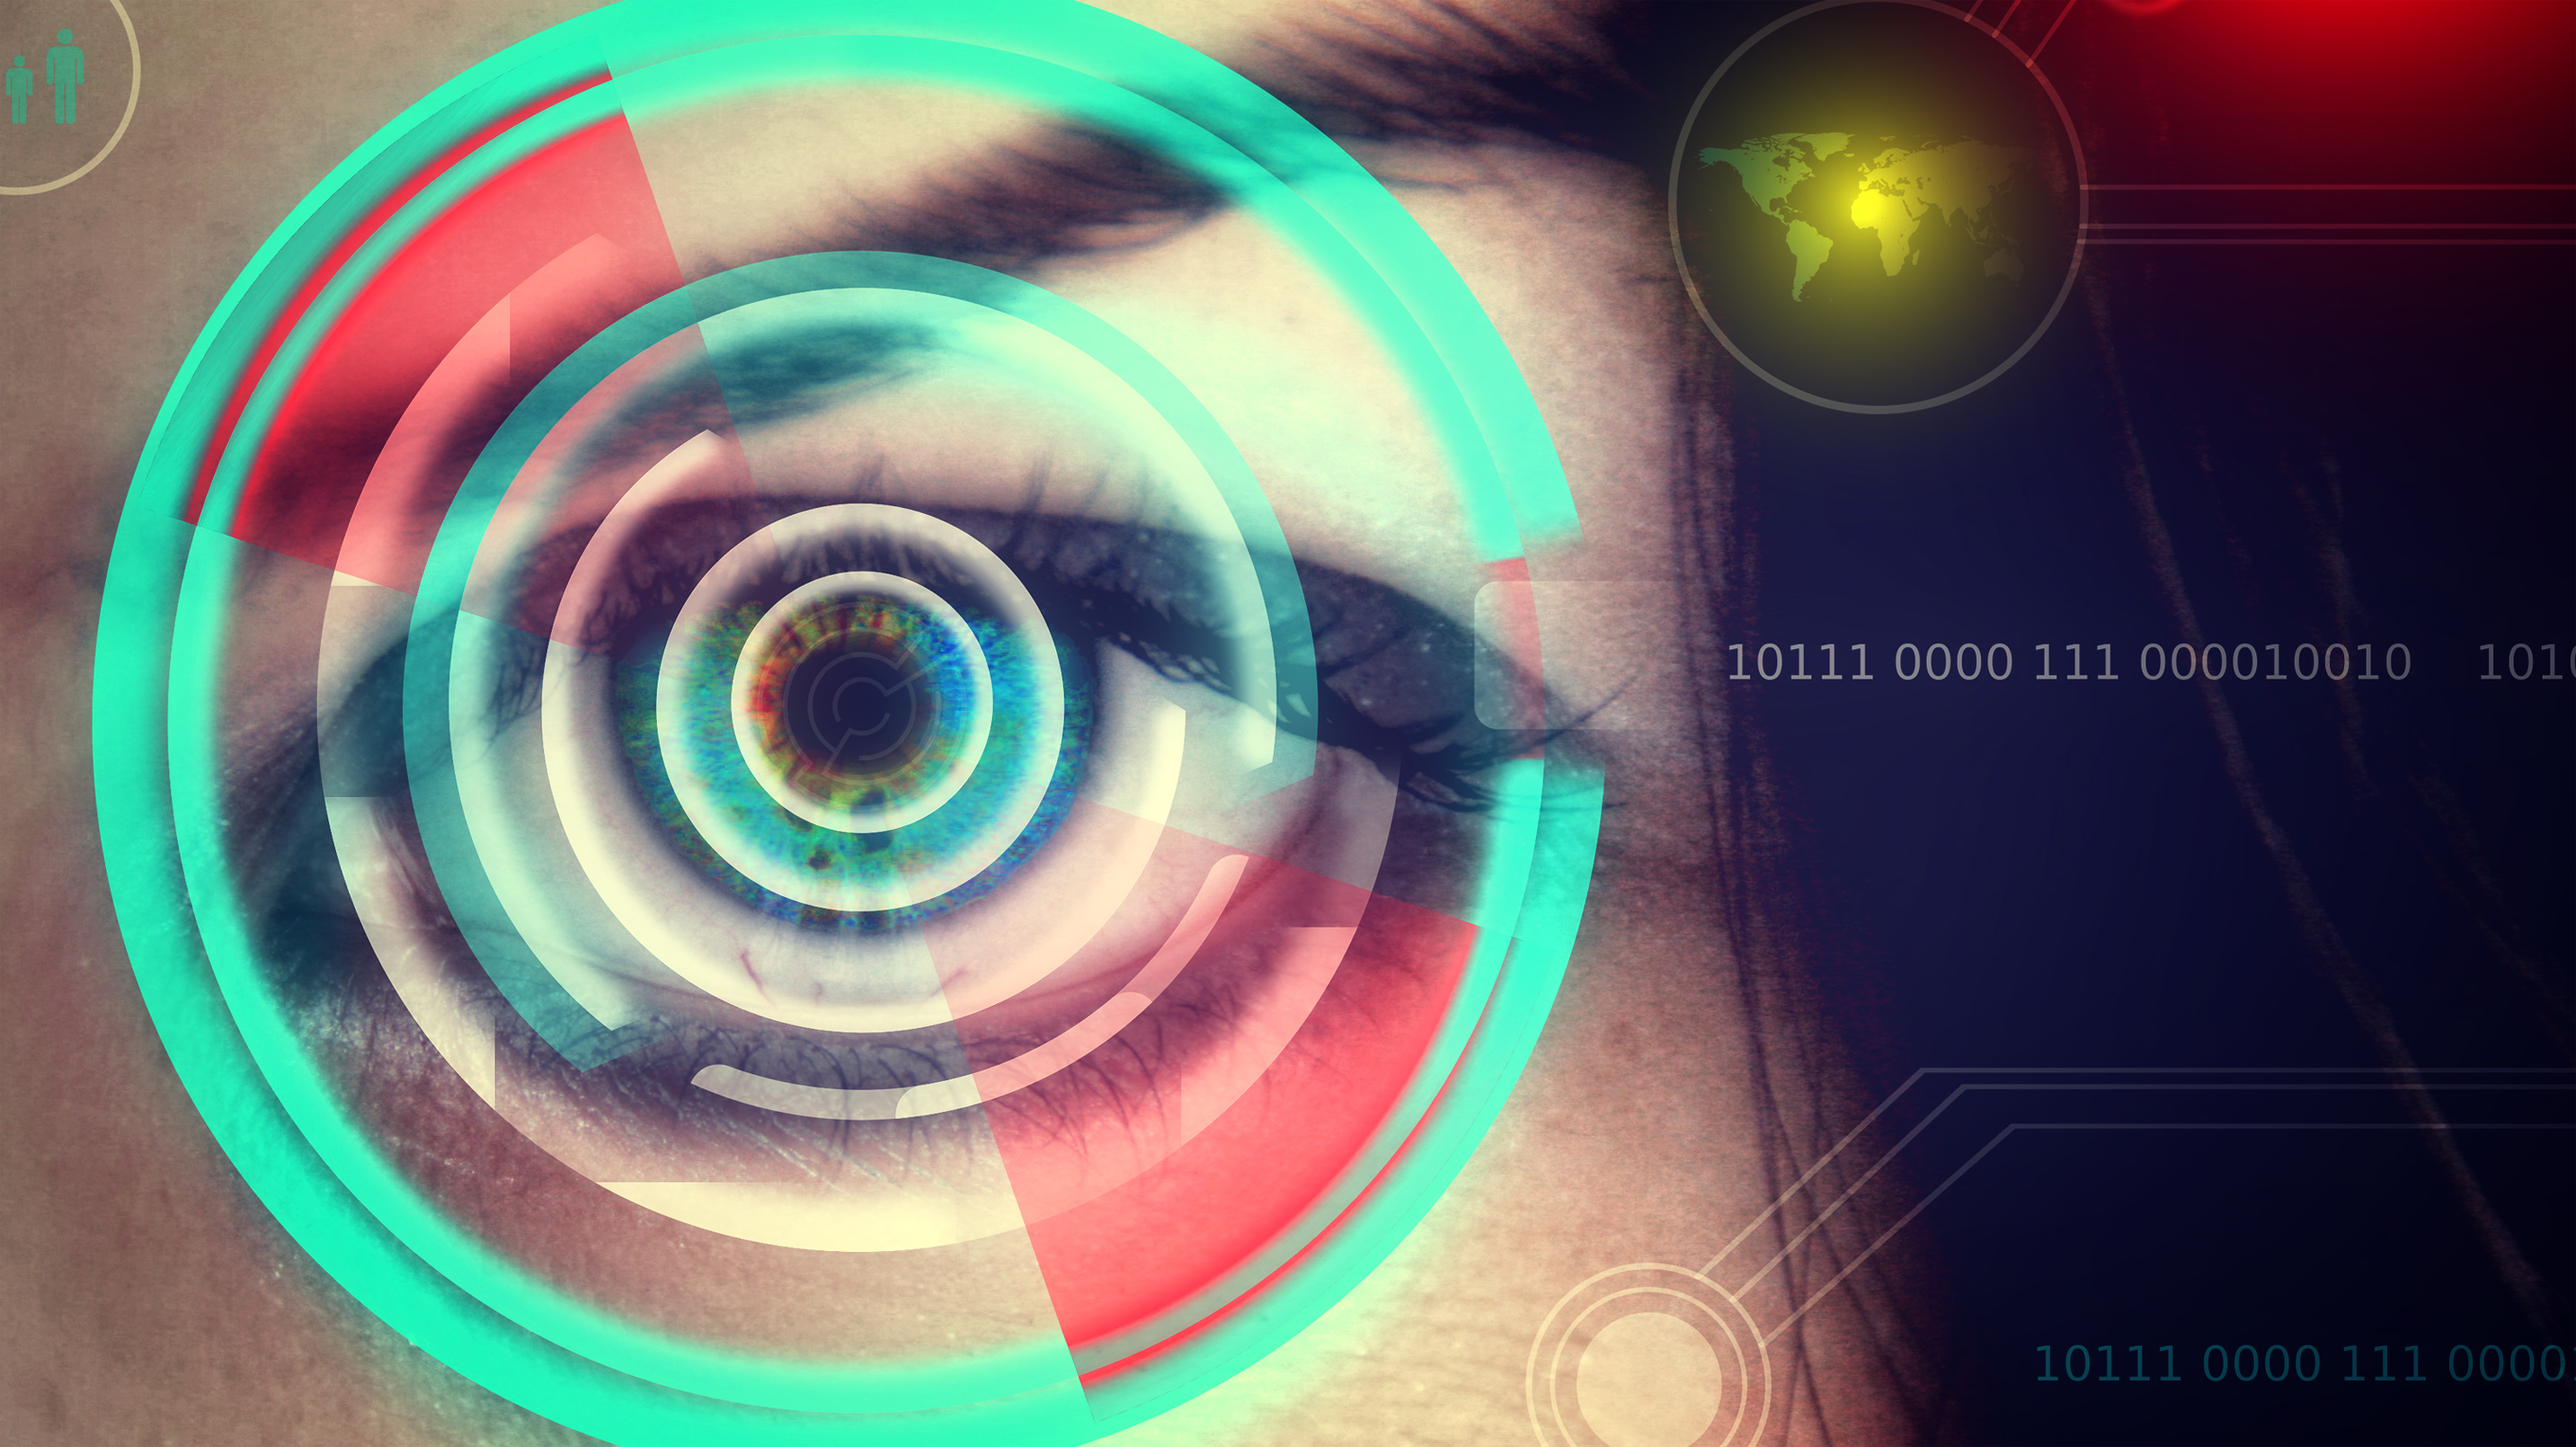 Human eye being scanned on virtual screen - biometrics concept photo